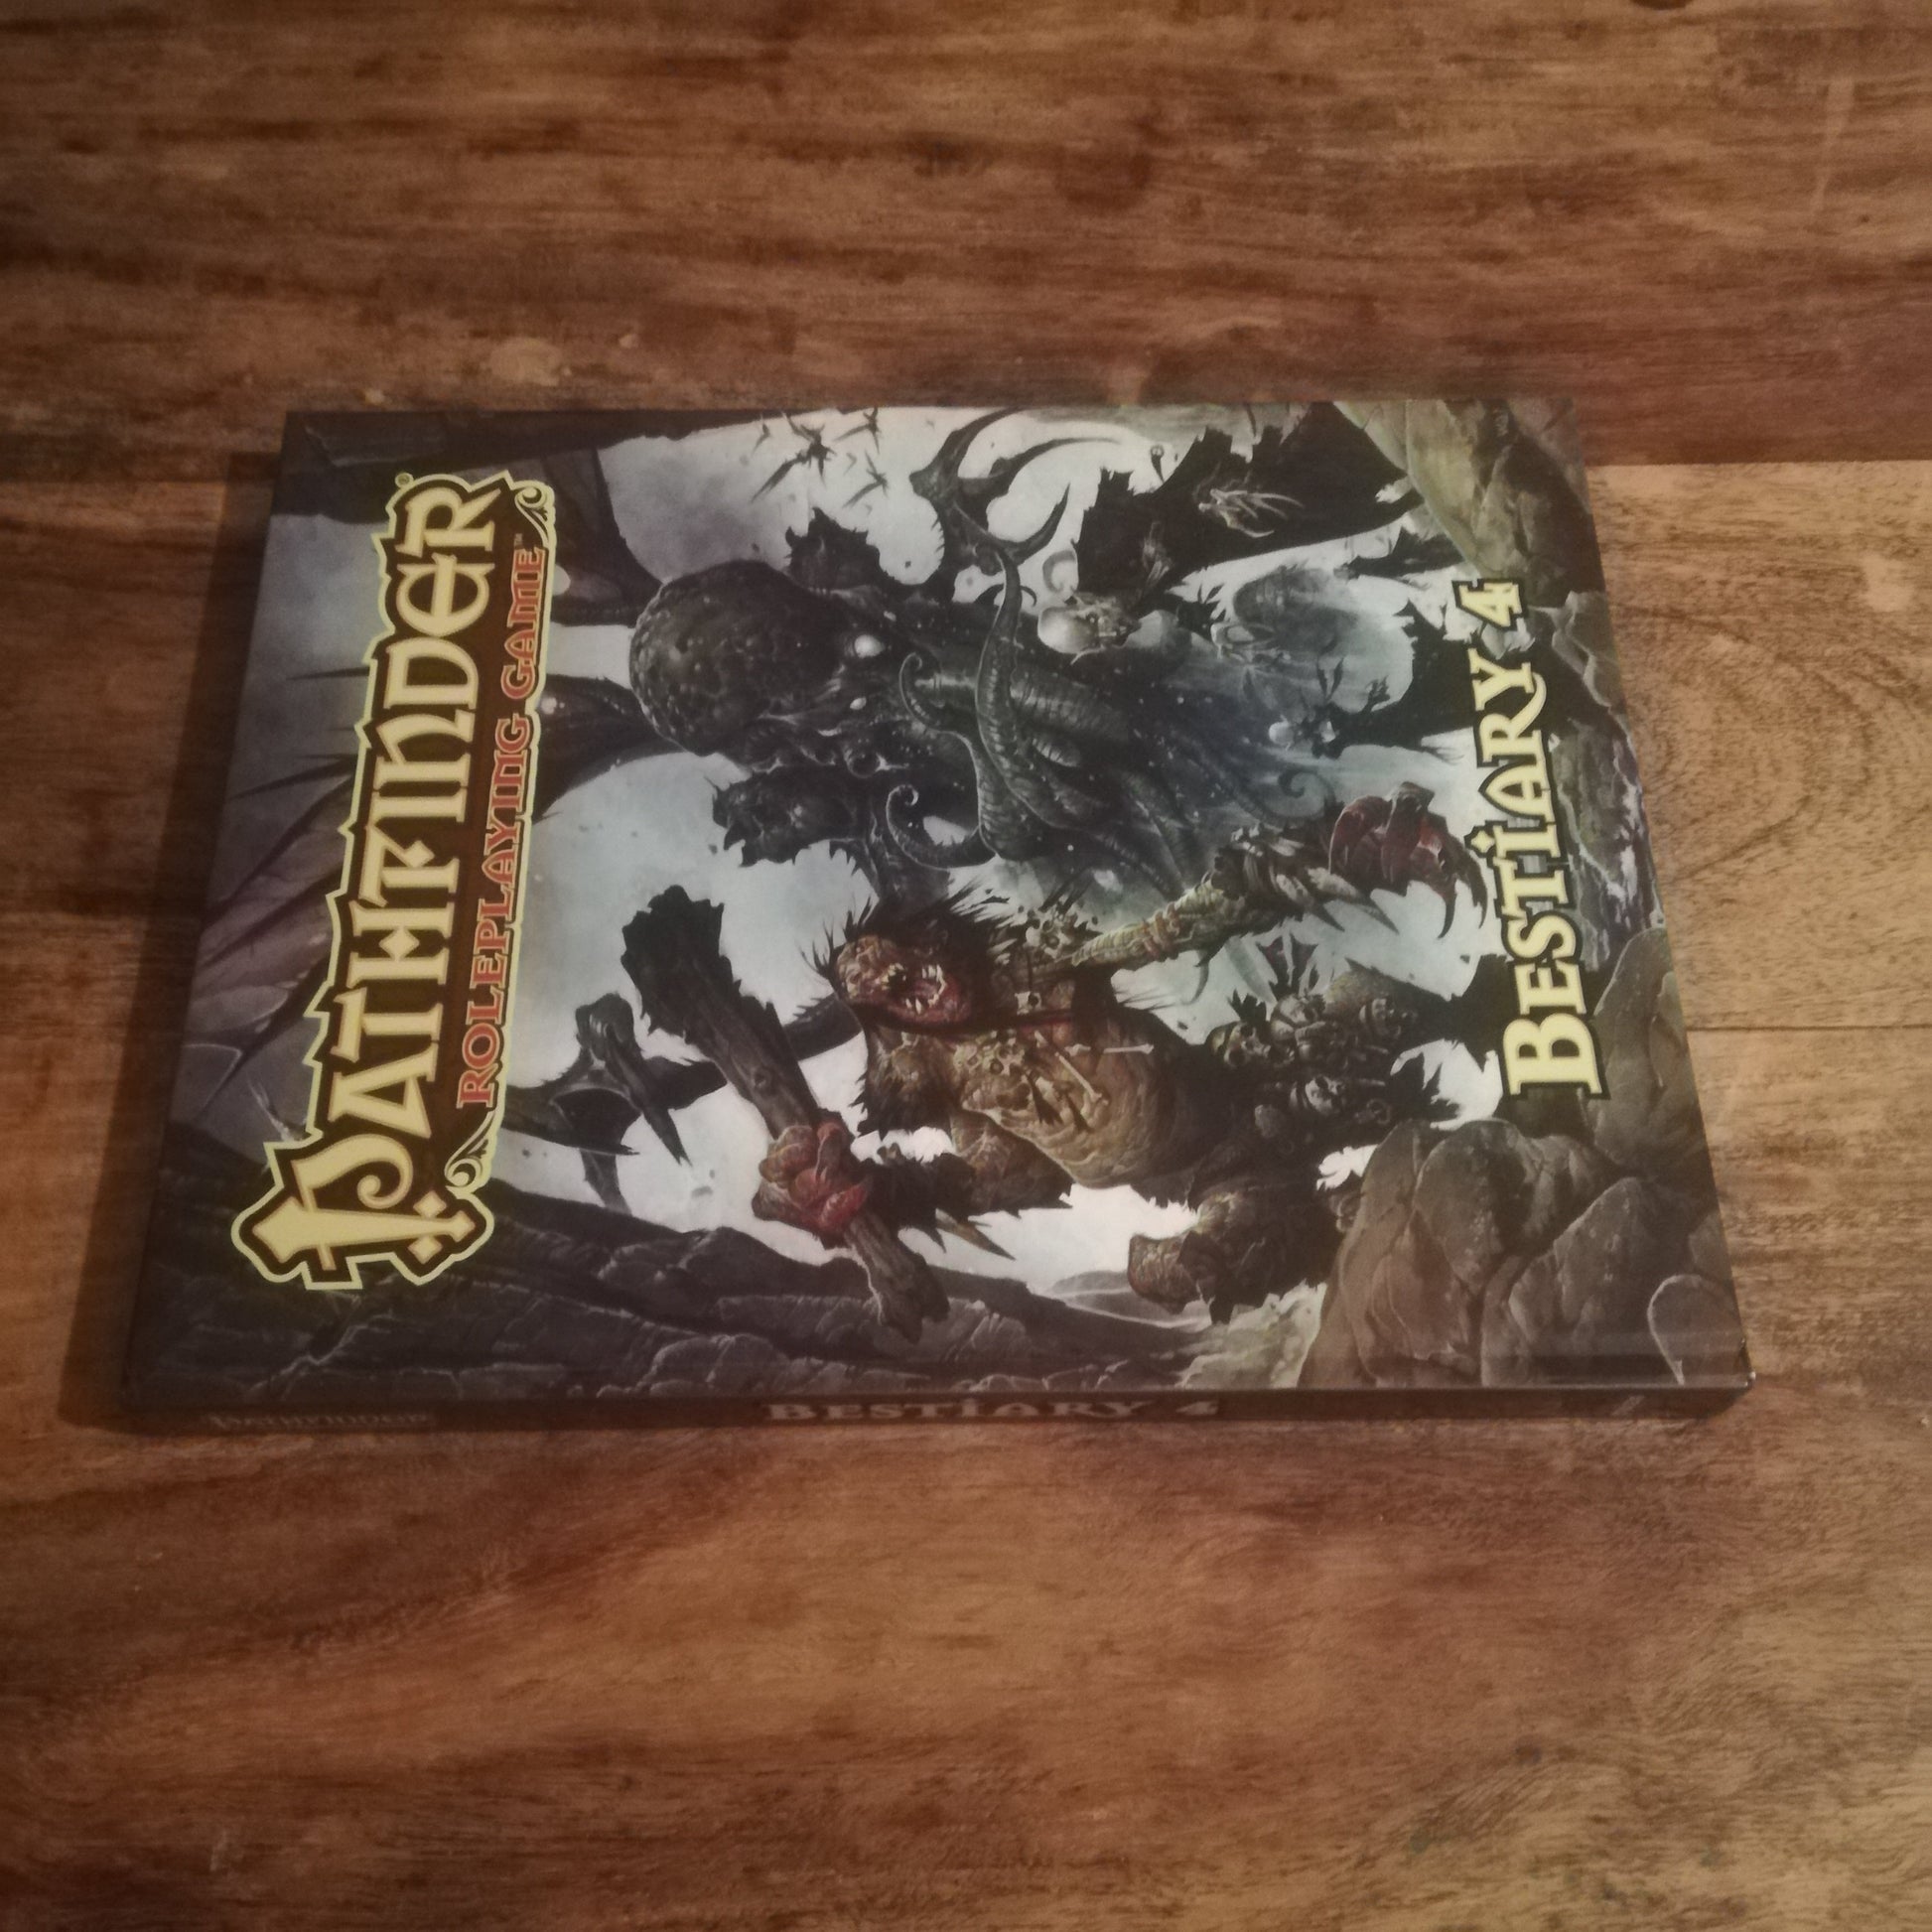 Pathfinder Bestiary 4 Hardcover - AllRoleplaying.com